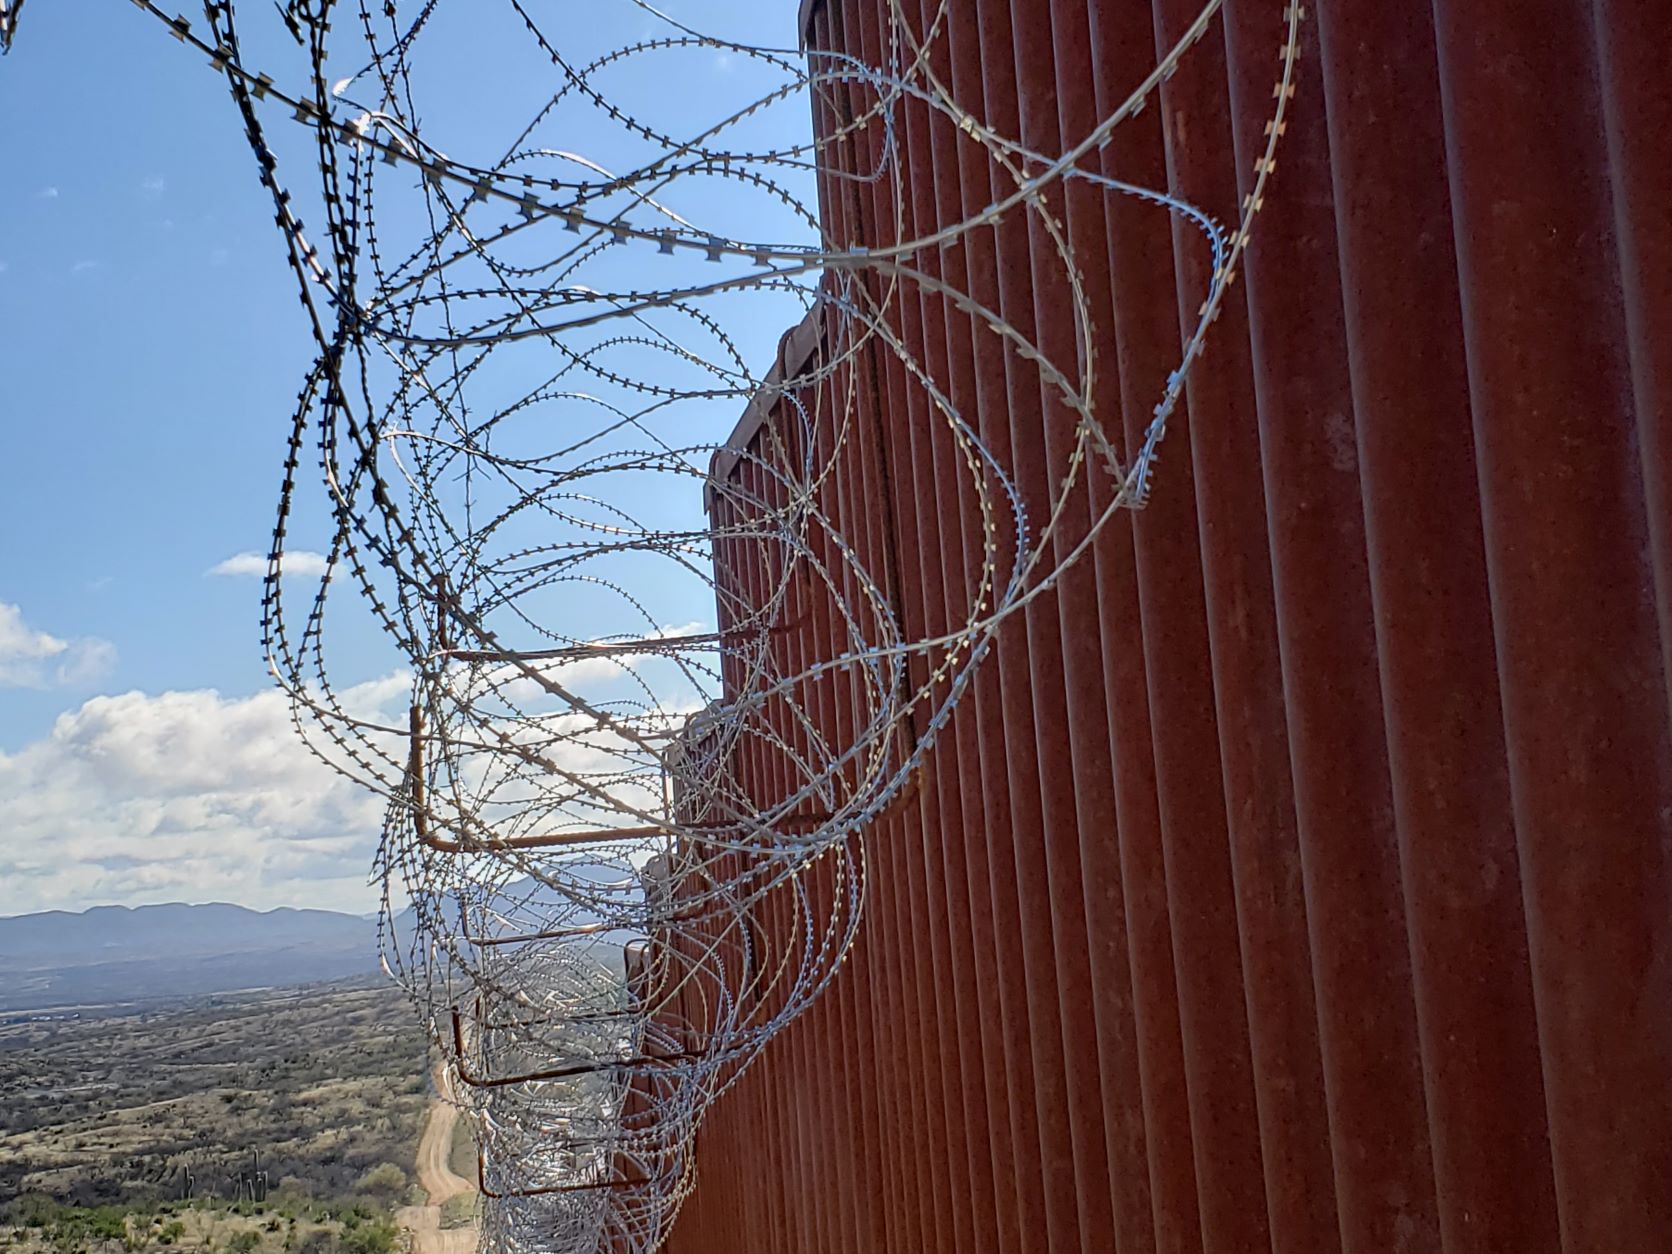 U.S. - Mexico border fence, Arizona - Sonora border